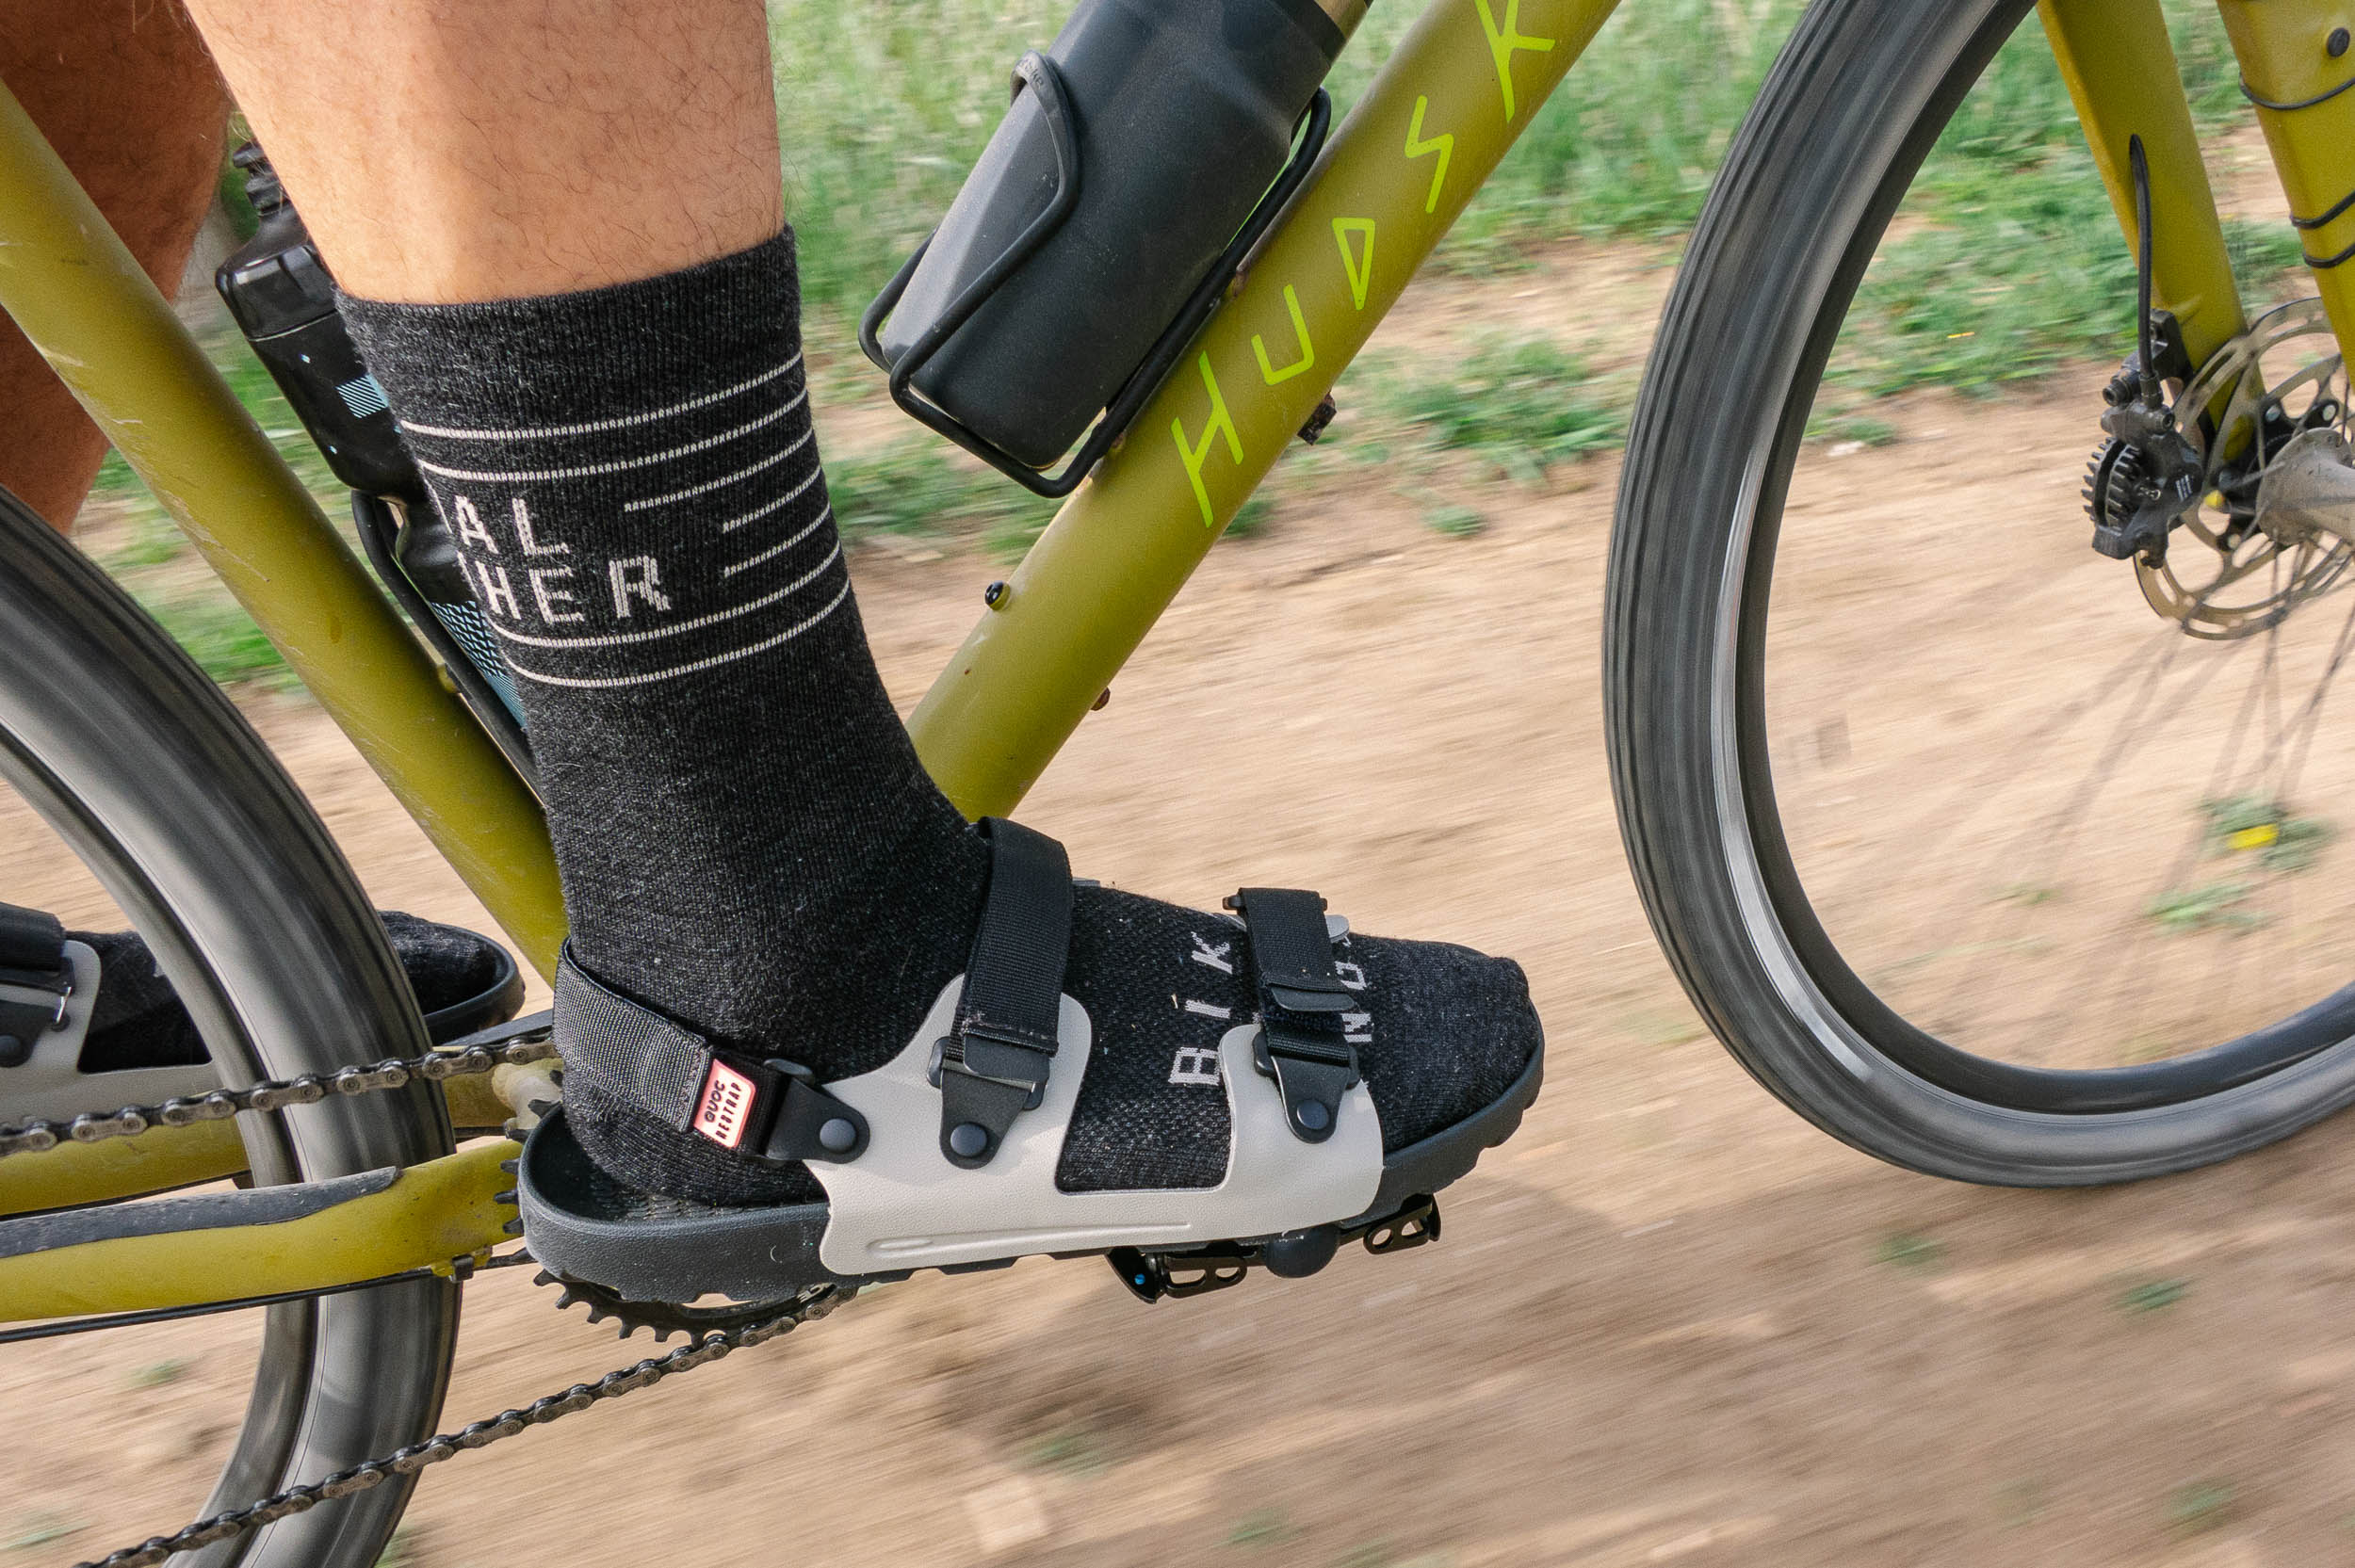 QUOC x Restrap Sandal Review: Post-Ride Sandals? - BIKEPACKING.com